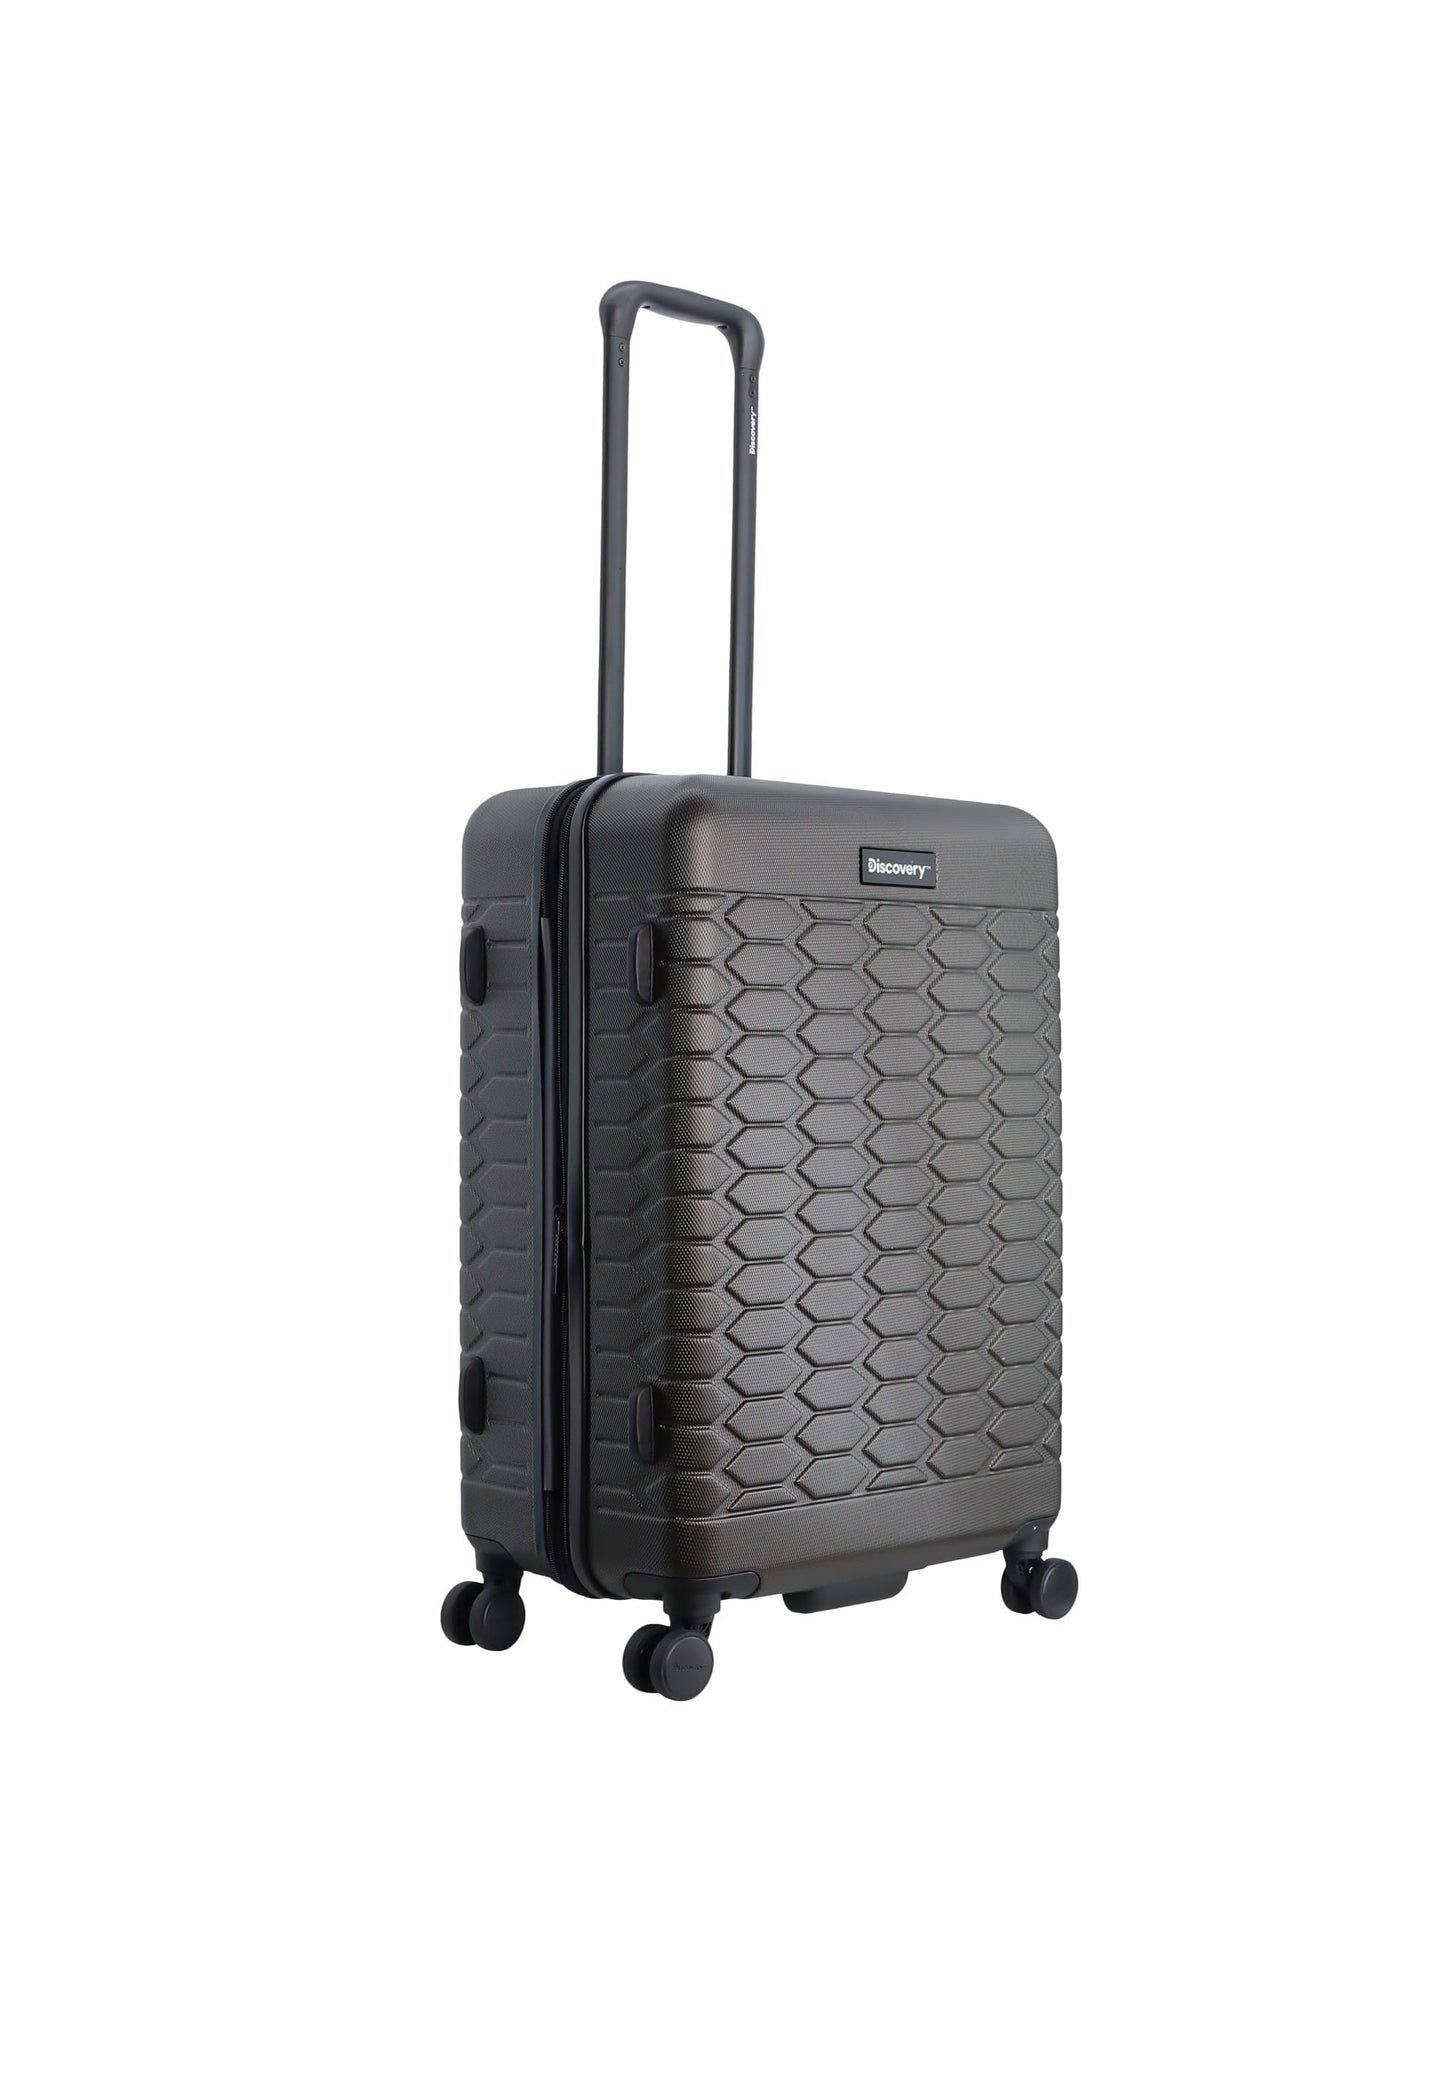 Valise rigide / trolley / valise de voyage Discovery Reptile - 67 cm (moyen) - Kaki